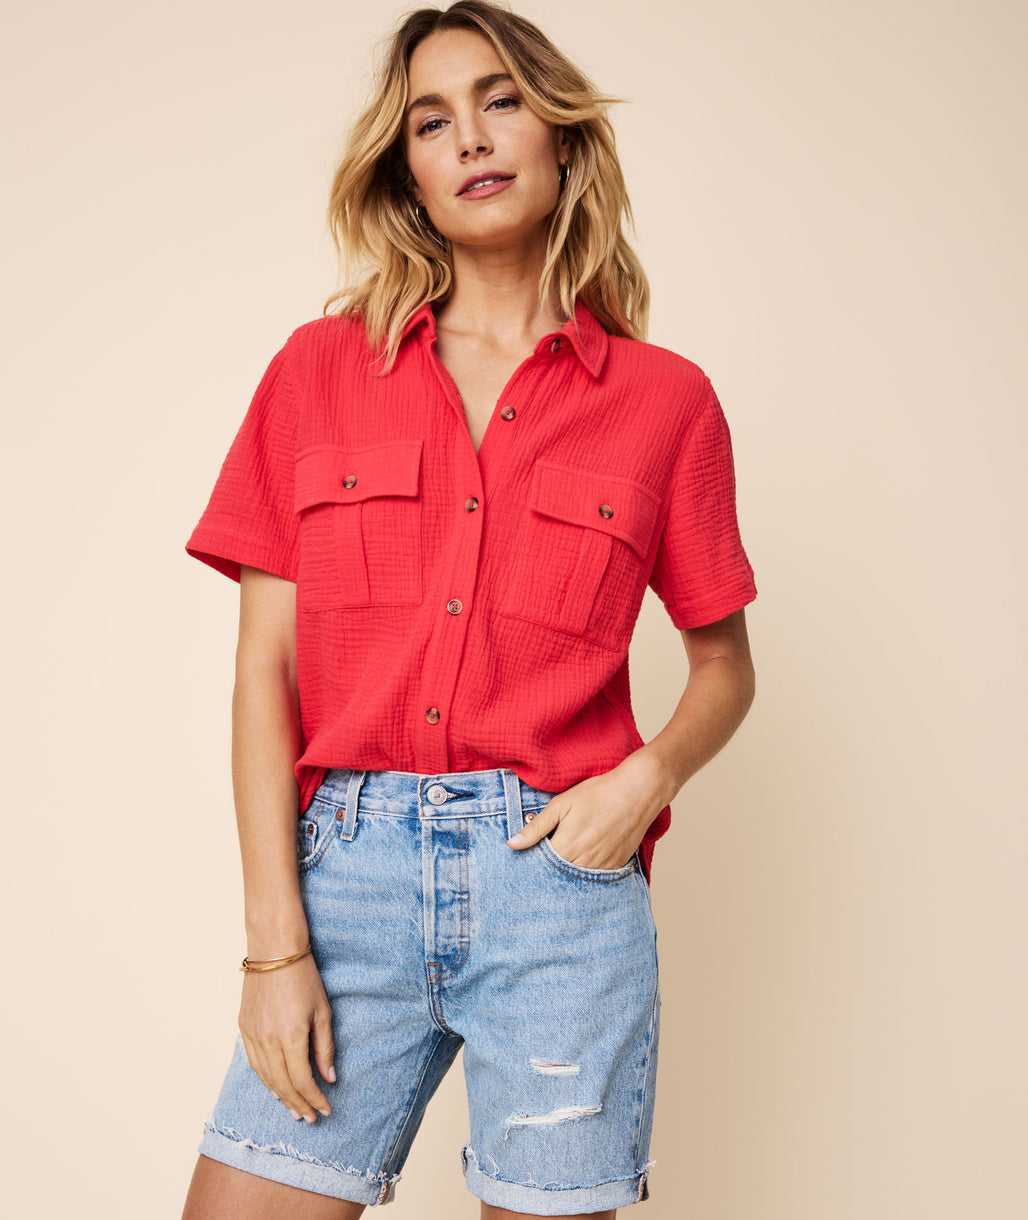 Model is wearing UNTUCKit Red Short-sleeve Cotton Gauze Jodi Shirt.